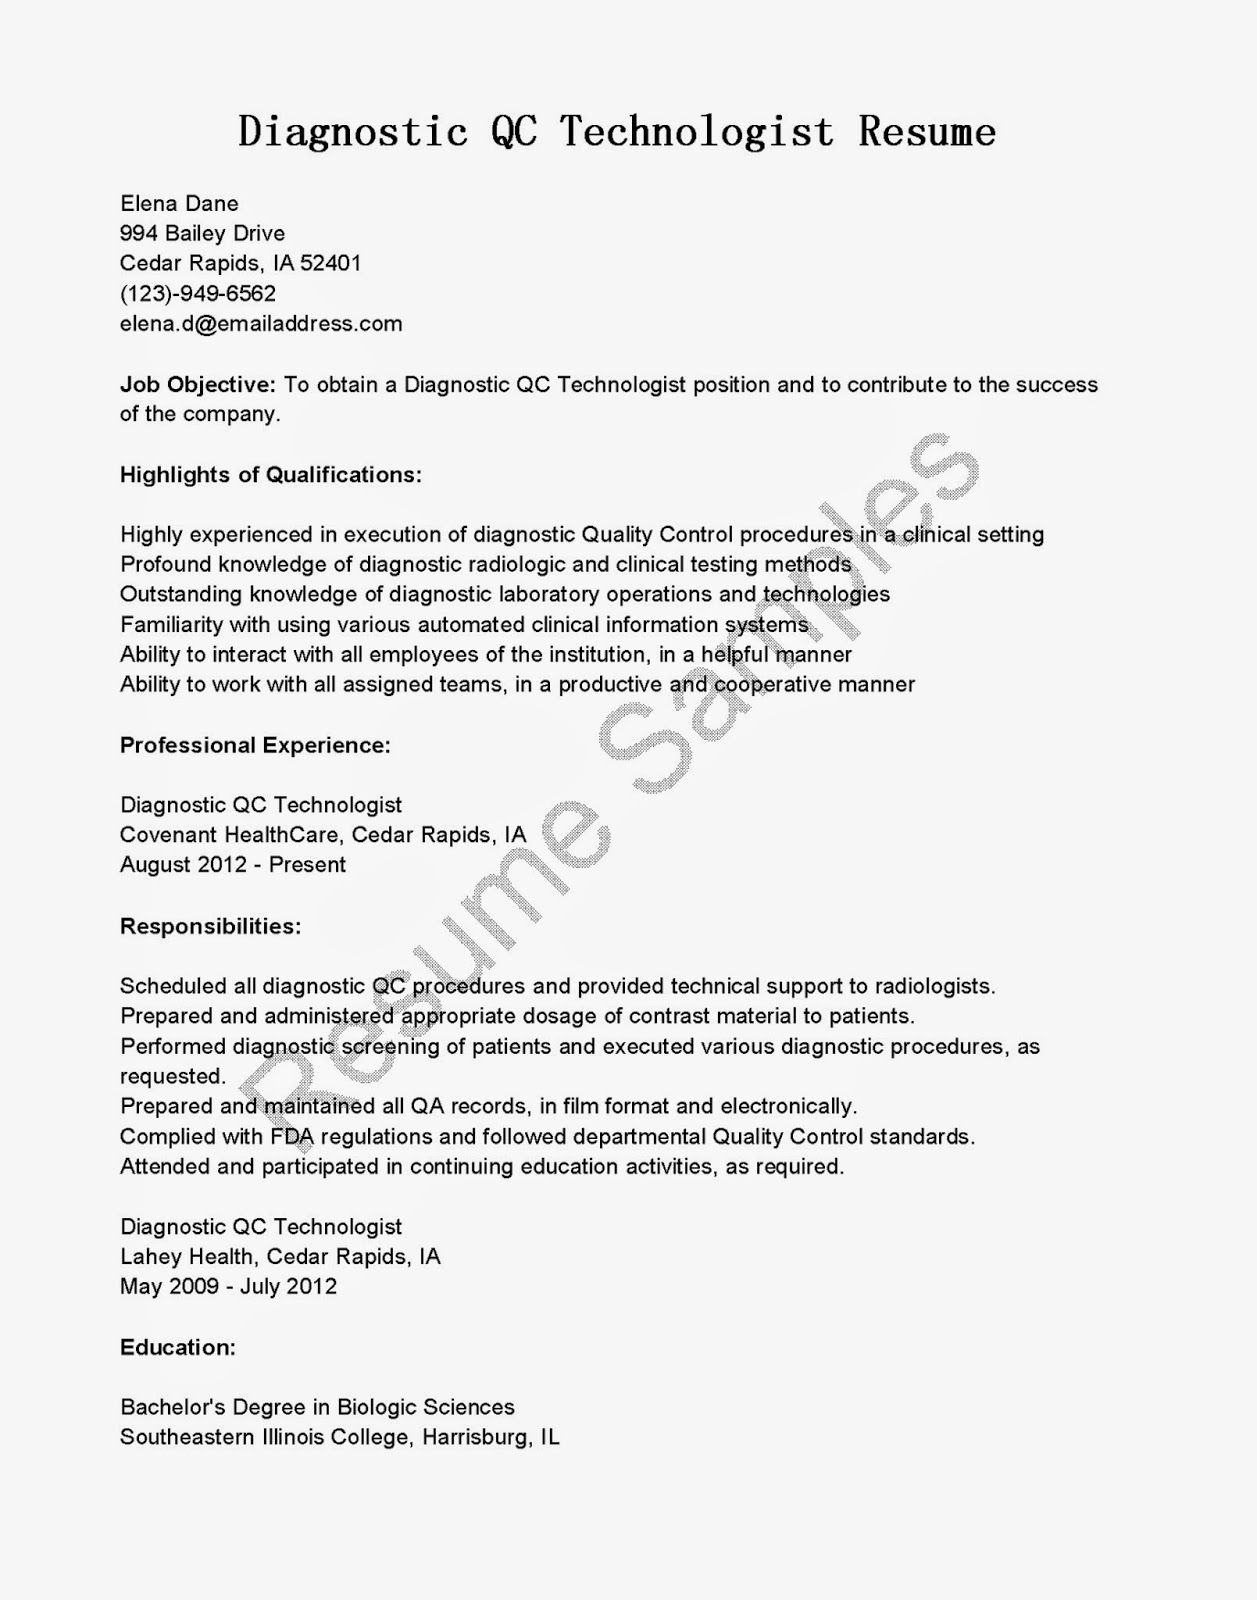 Dental laboratory technician resume